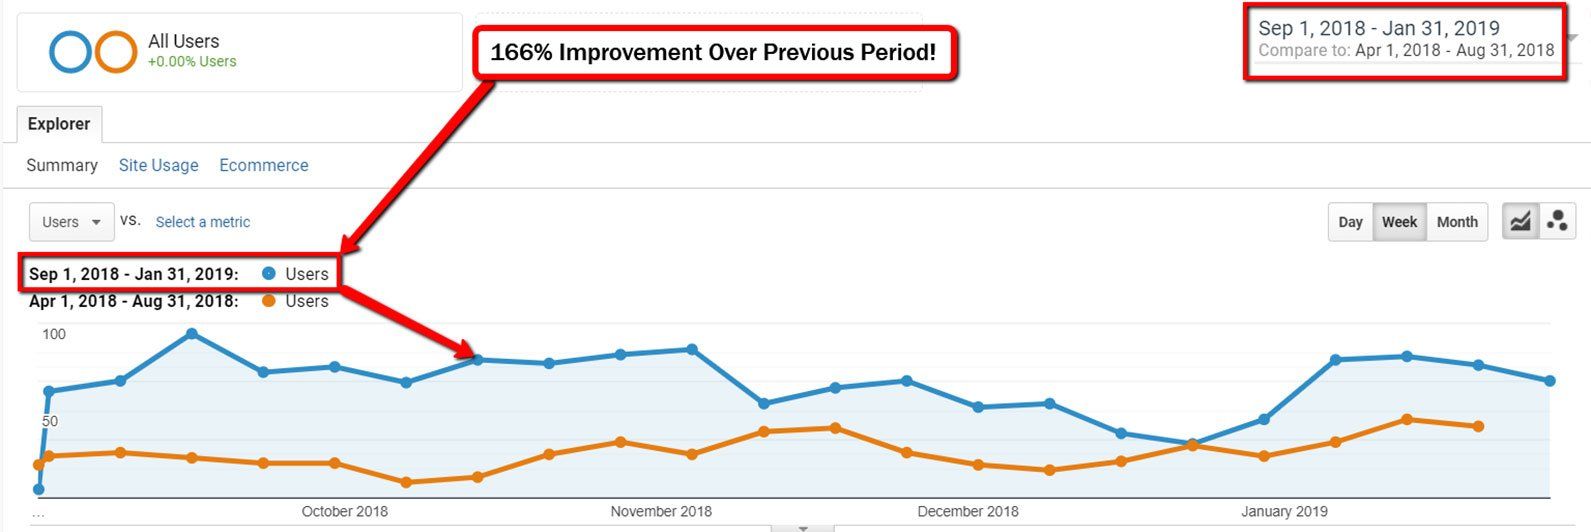 166% Improvement Over Previous Period!